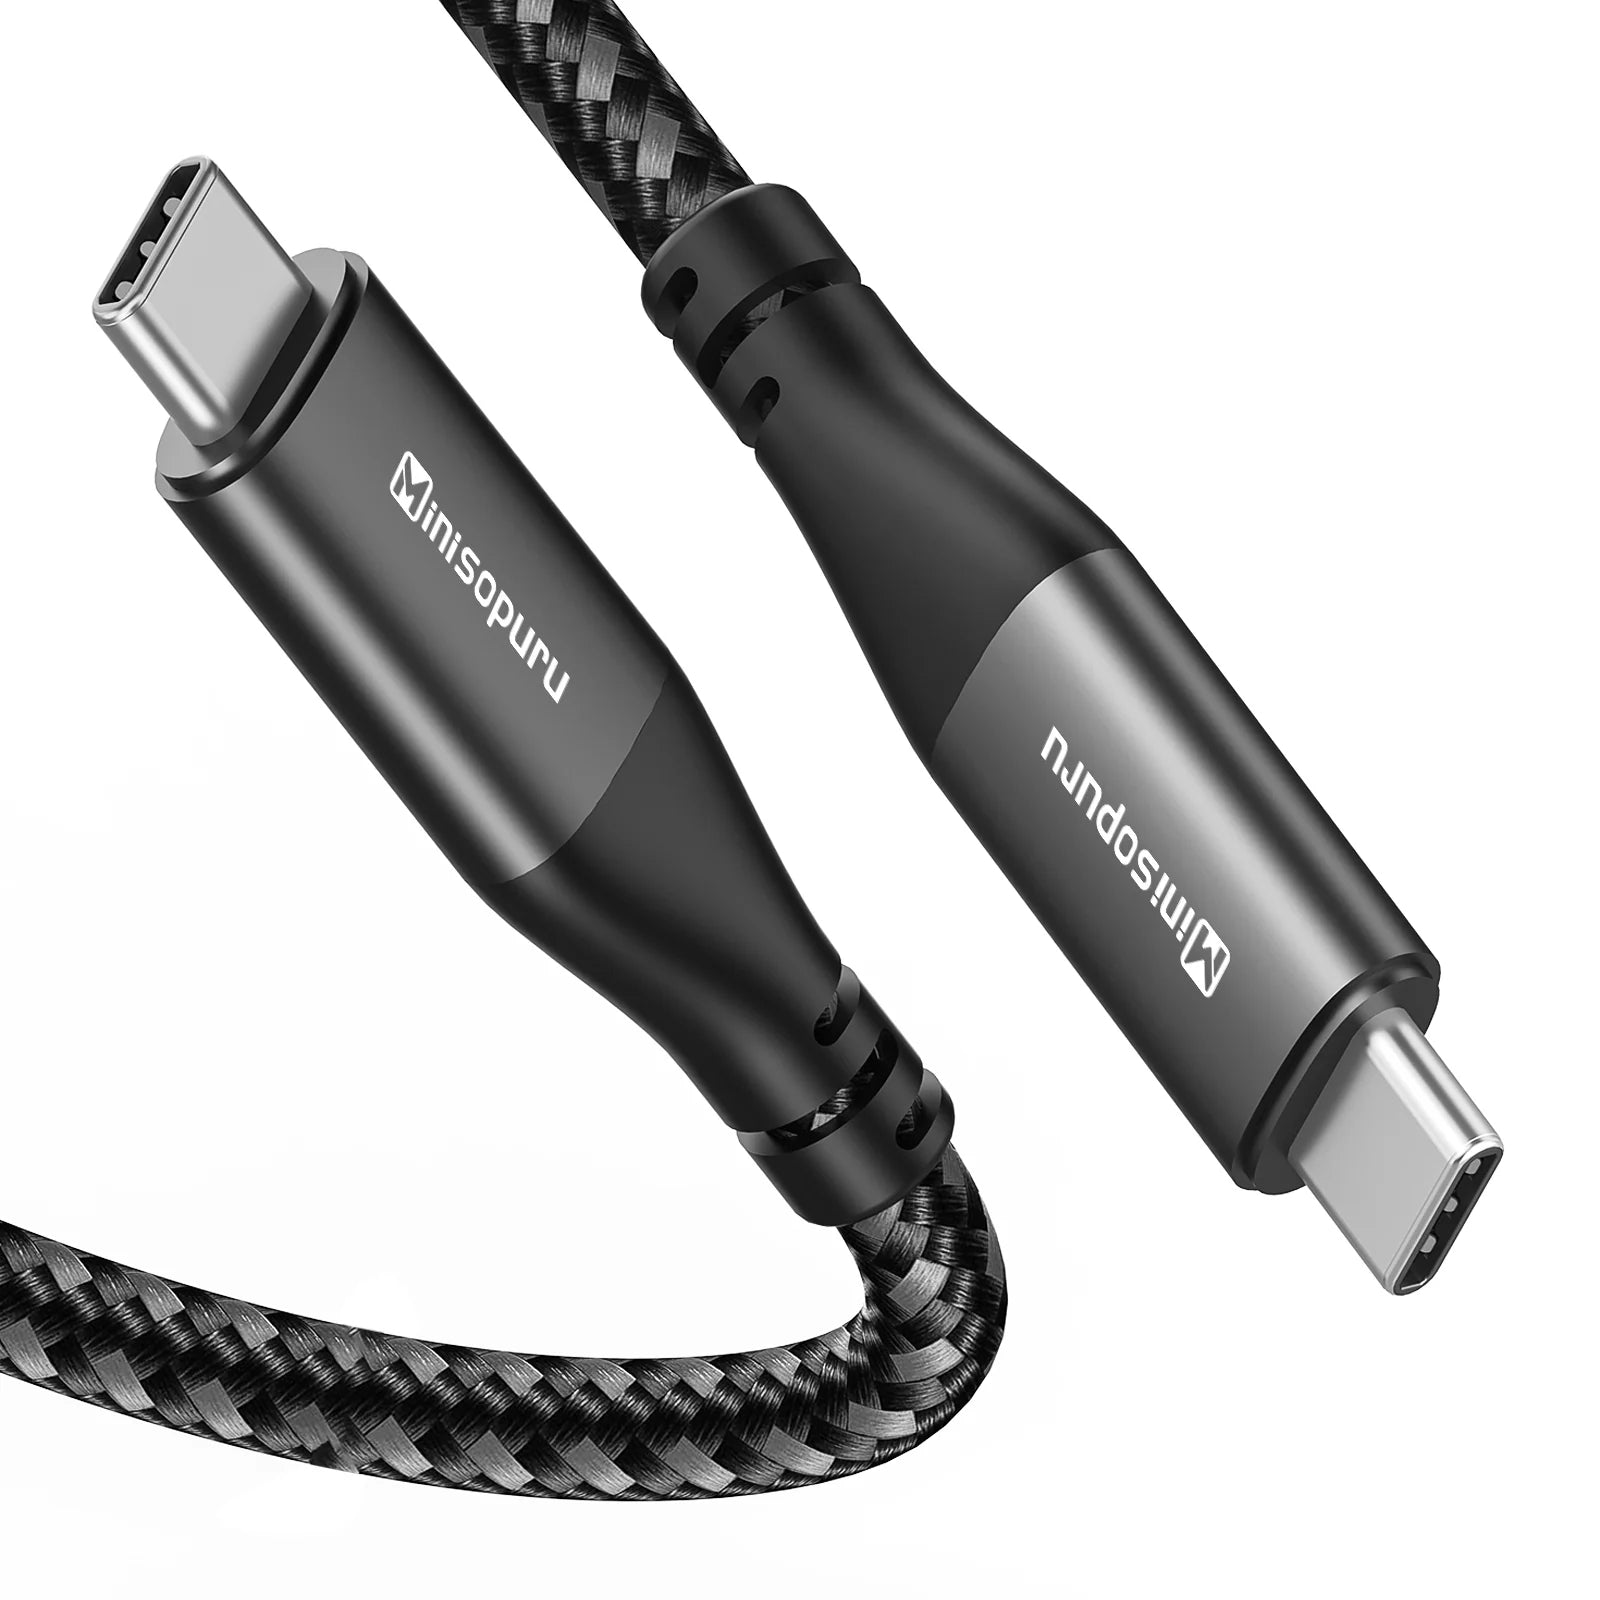 USB C Charging Cables